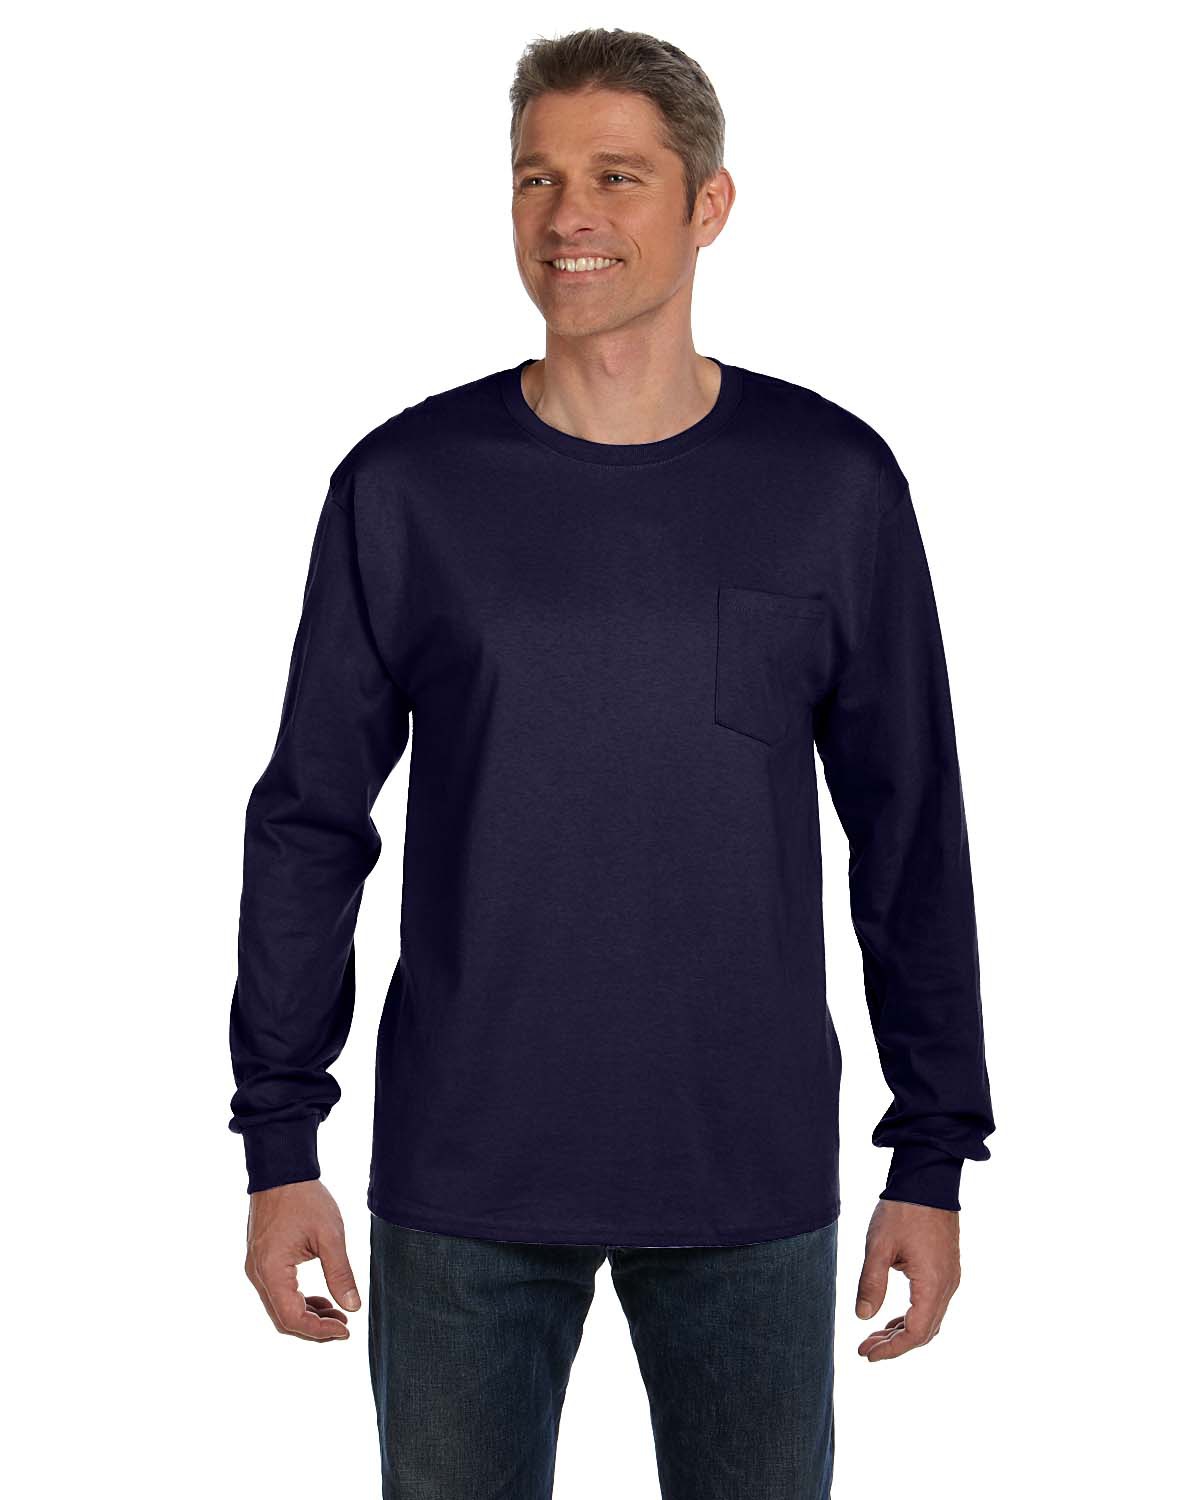 Hanes 5596 - Men's Authentic Long Sleeve Pocket T-Shirt